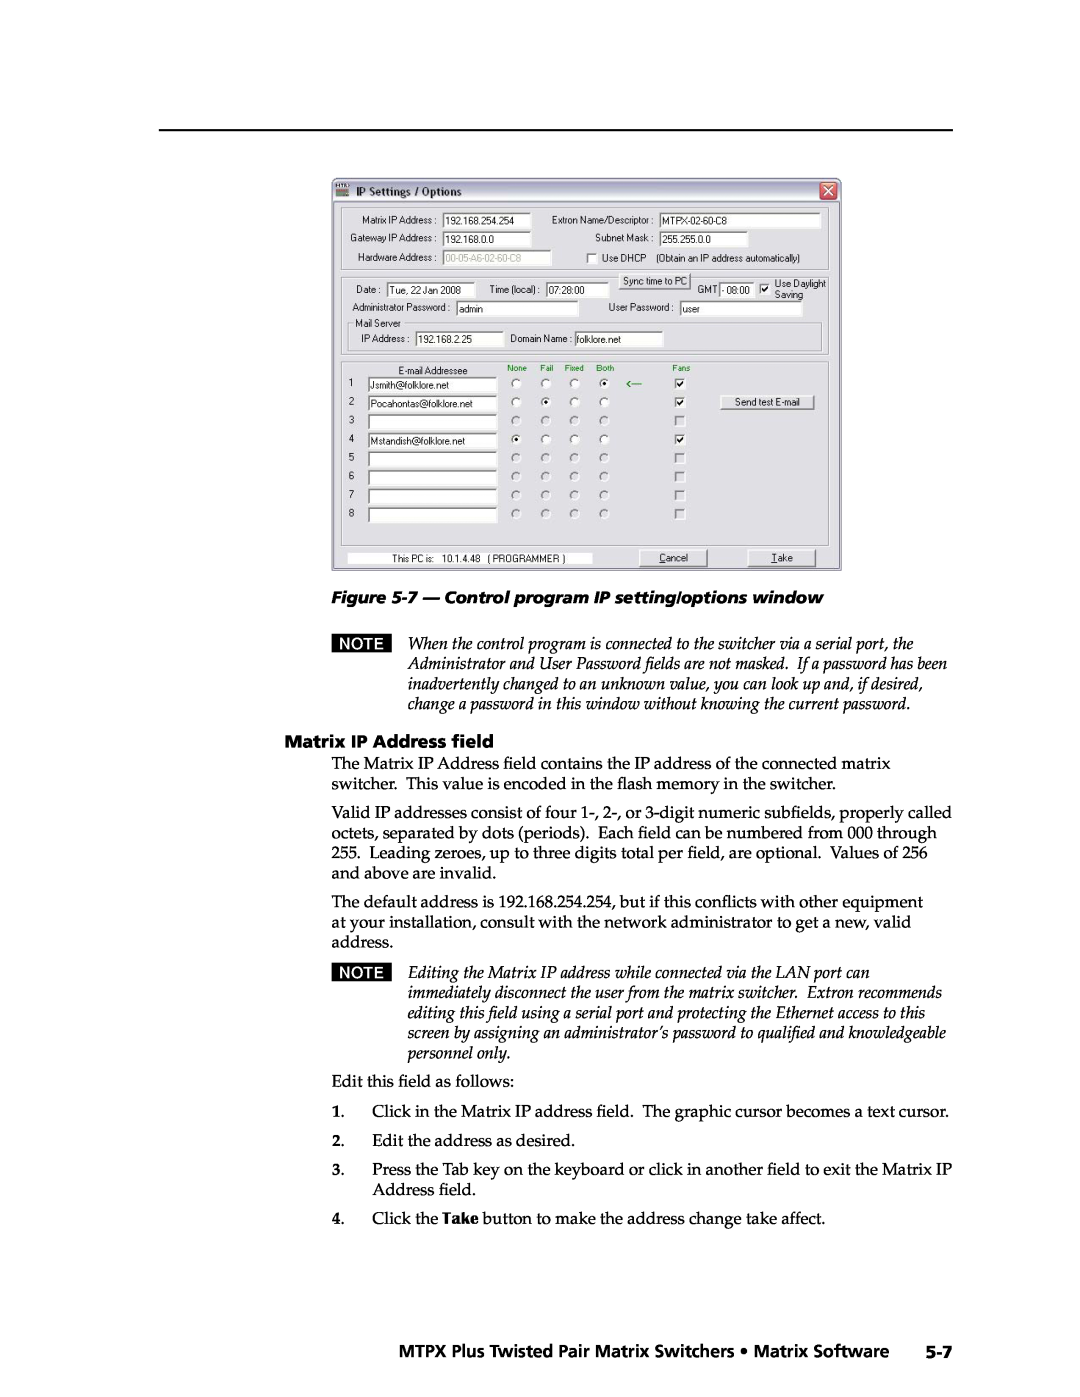 Extron electronic MTPX Plus Series manual 7 - Control program IP setting/options window, Matrix IP Address field 